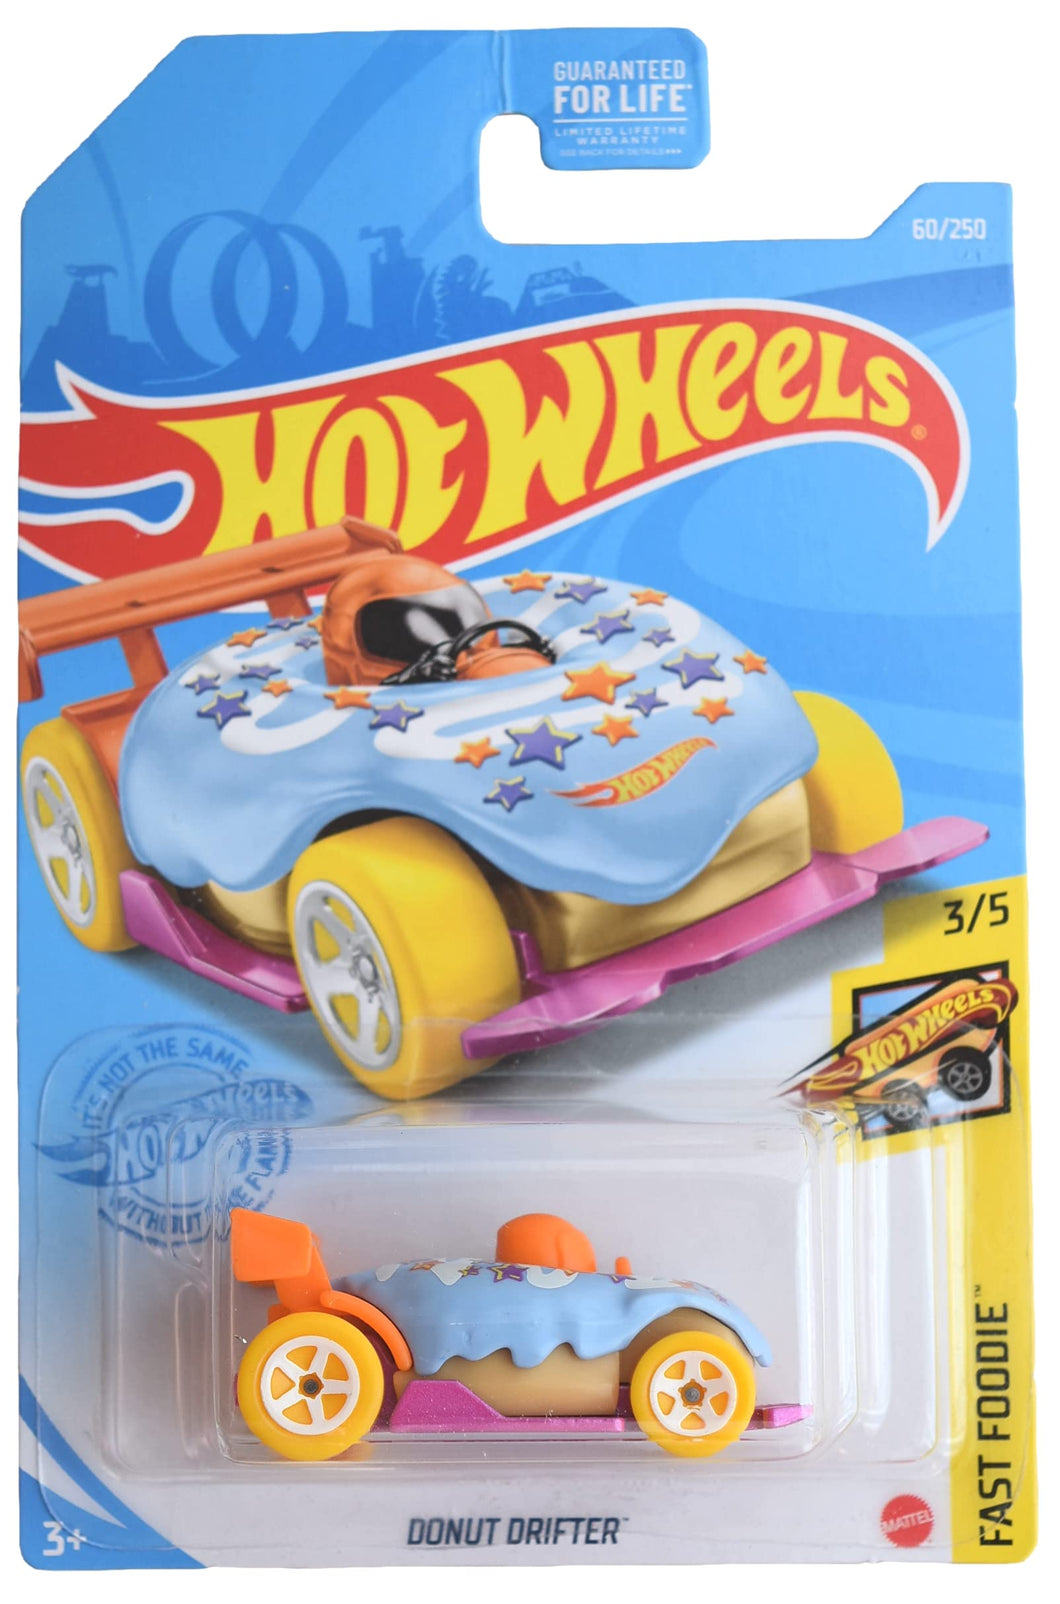 Hot Wheels Donut Drifter, Fast Foodie 3/5, 60/250